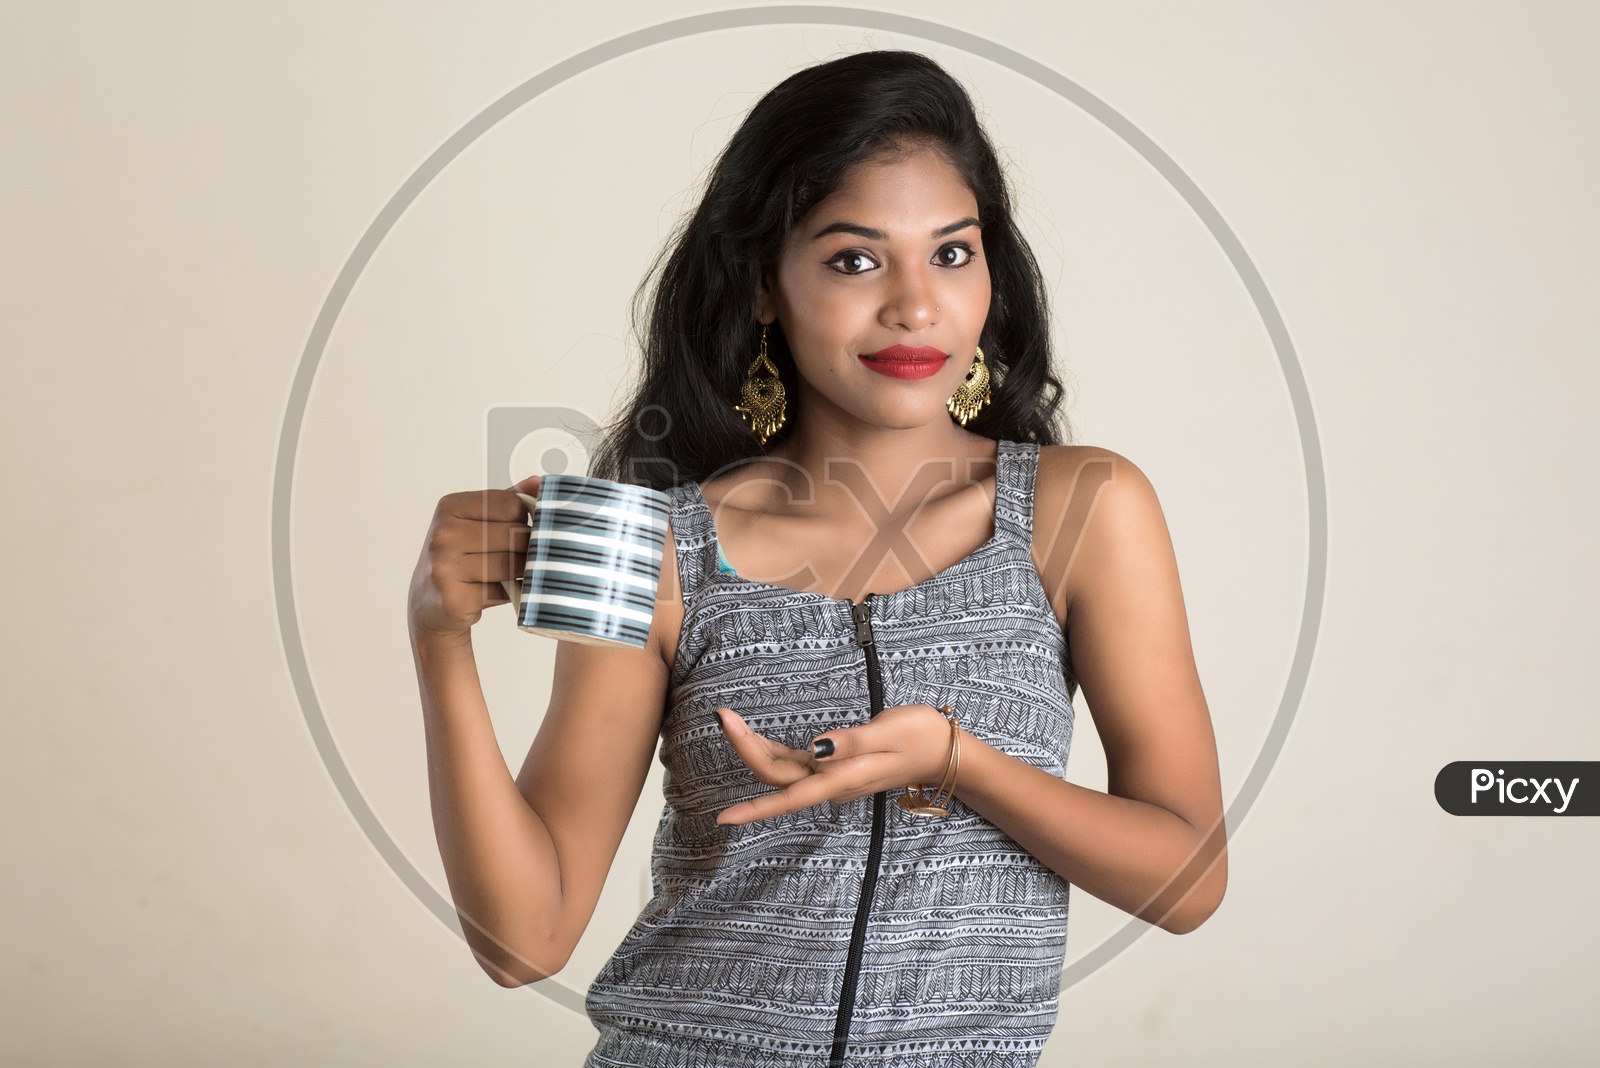 Indian woman holding a mug